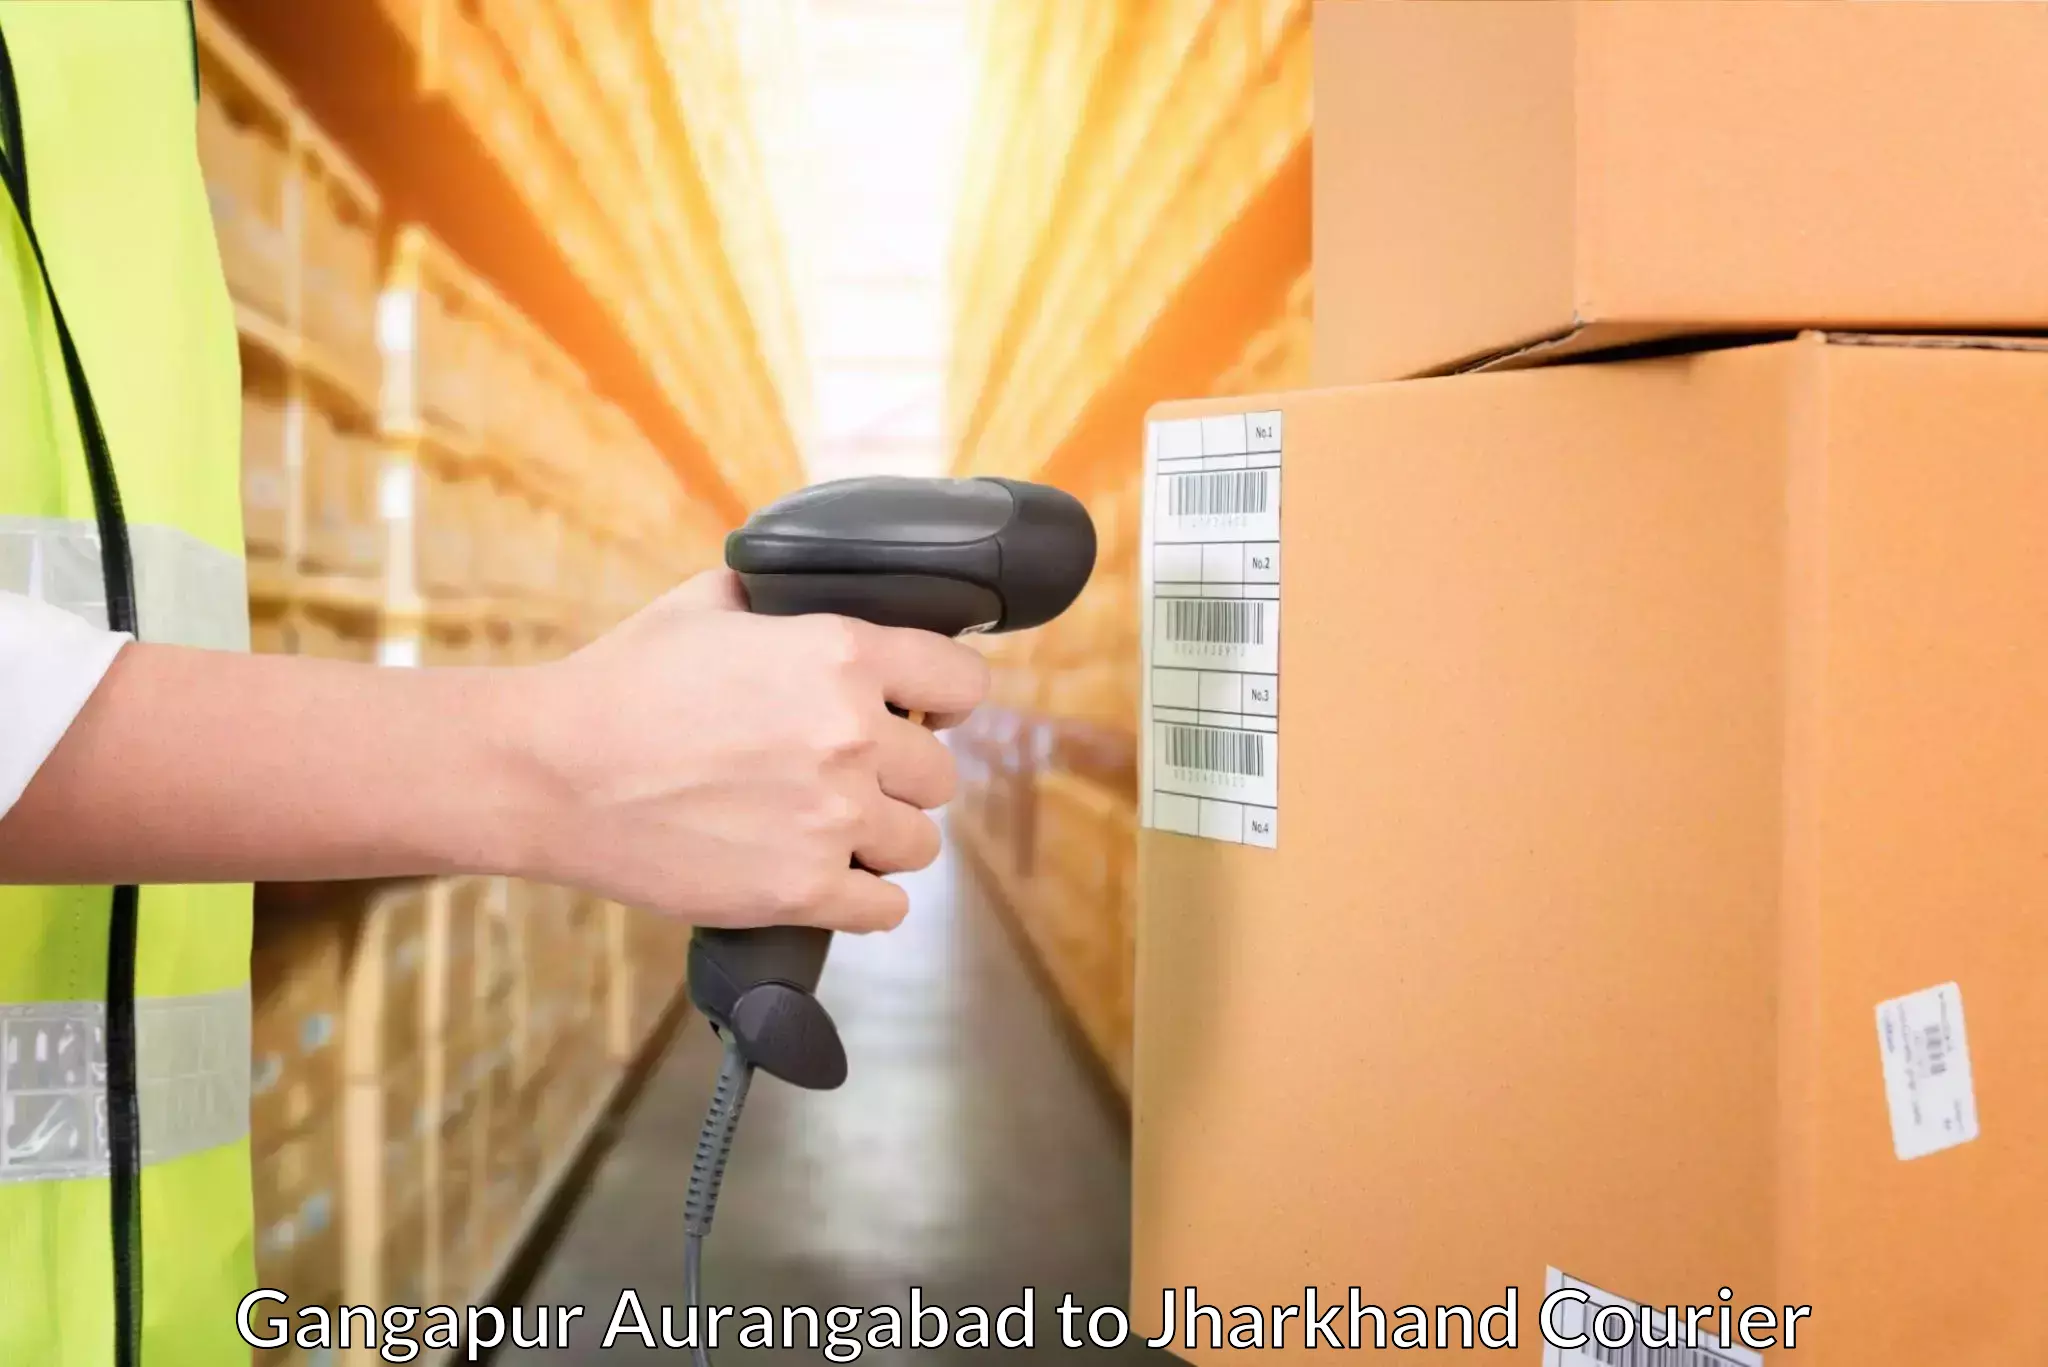 Customizable delivery plans Gangapur Aurangabad to Jamshedpur